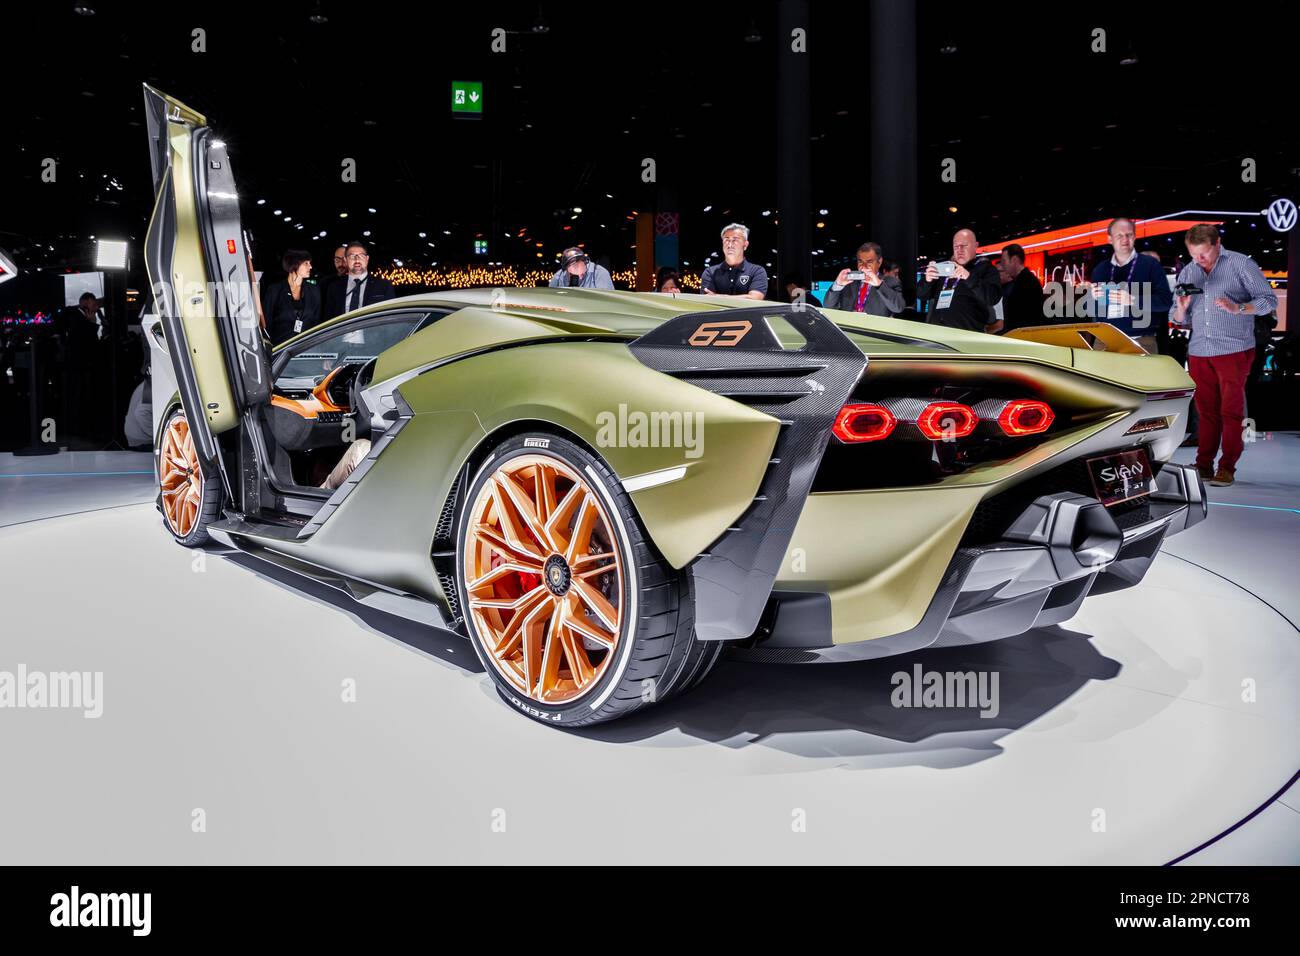 Lamborghini Sian FKP 37 hybrid super sports car showcased at the Frankfurt IAA Motor Show. Germany - September 10, 2019 Stock Photo